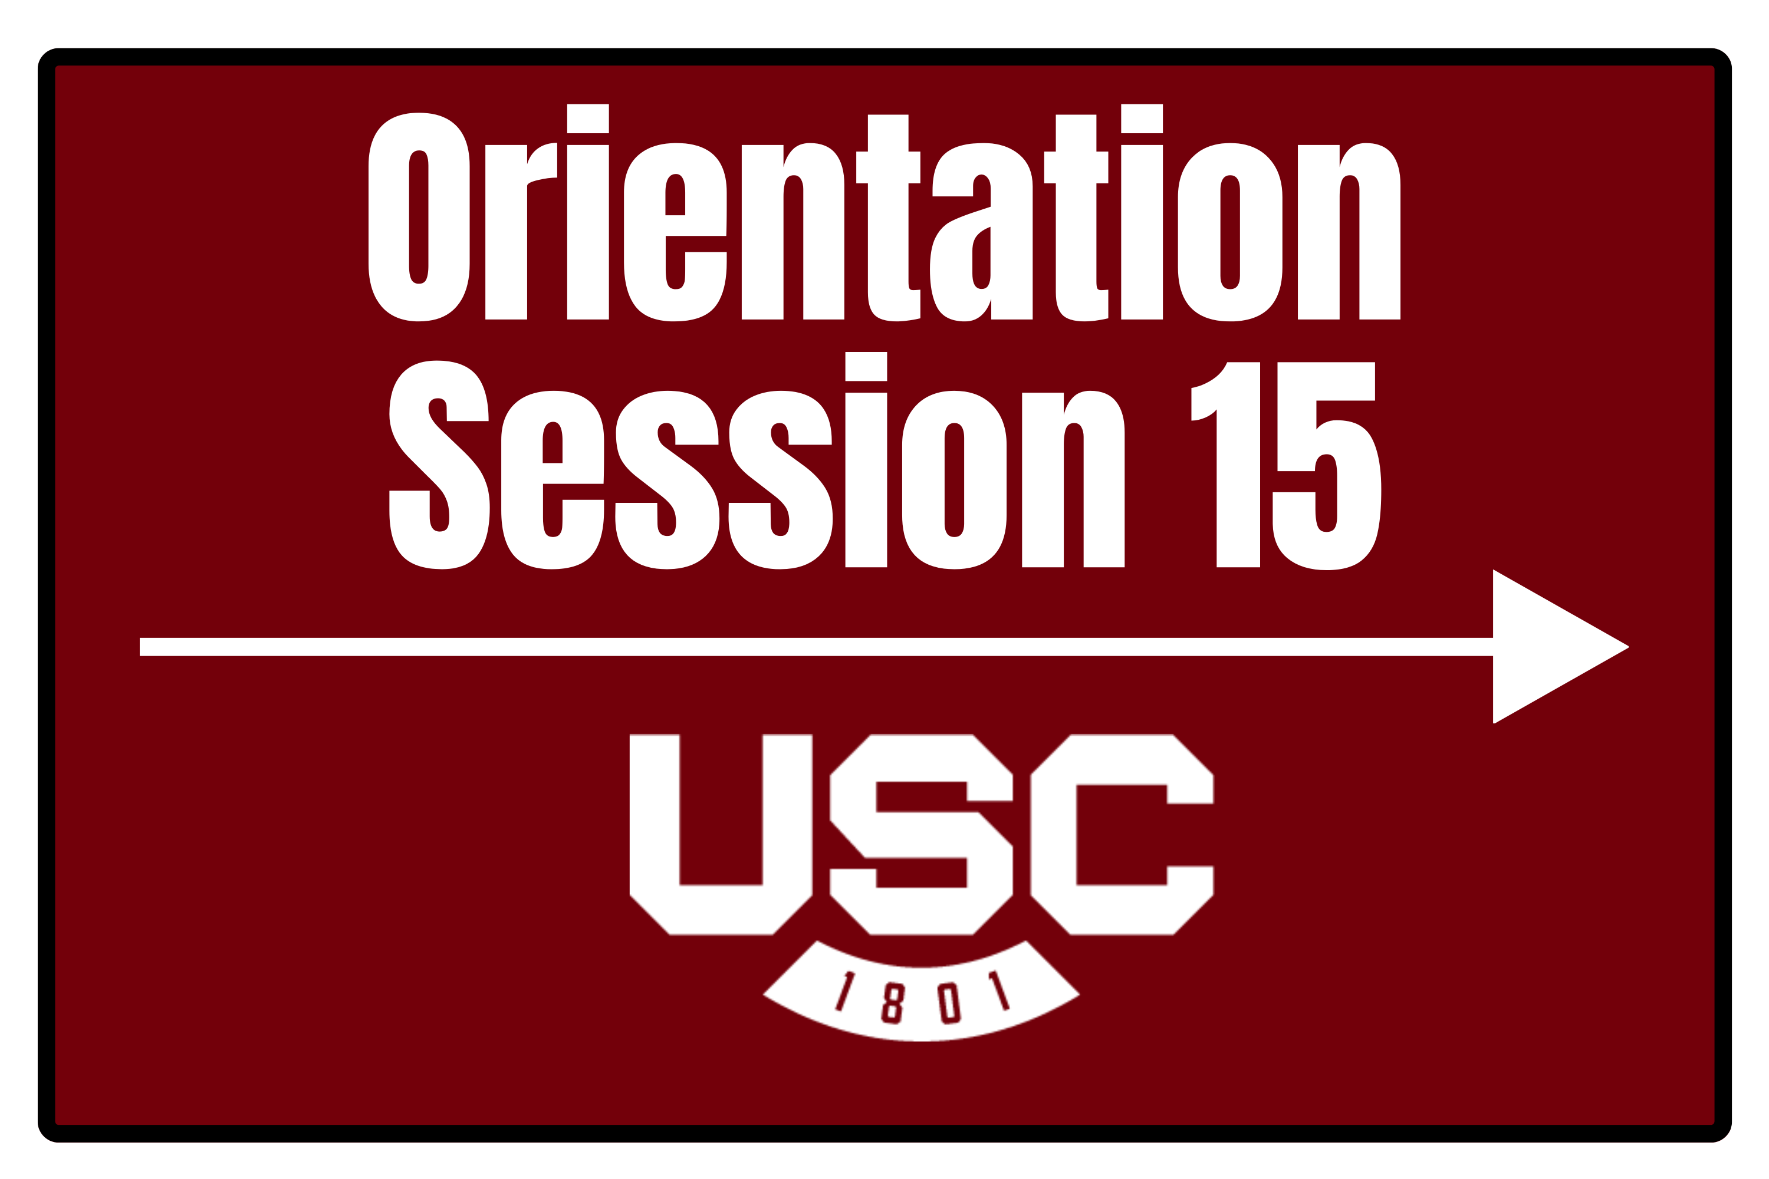 Orientation Session 15: July 17 - 18